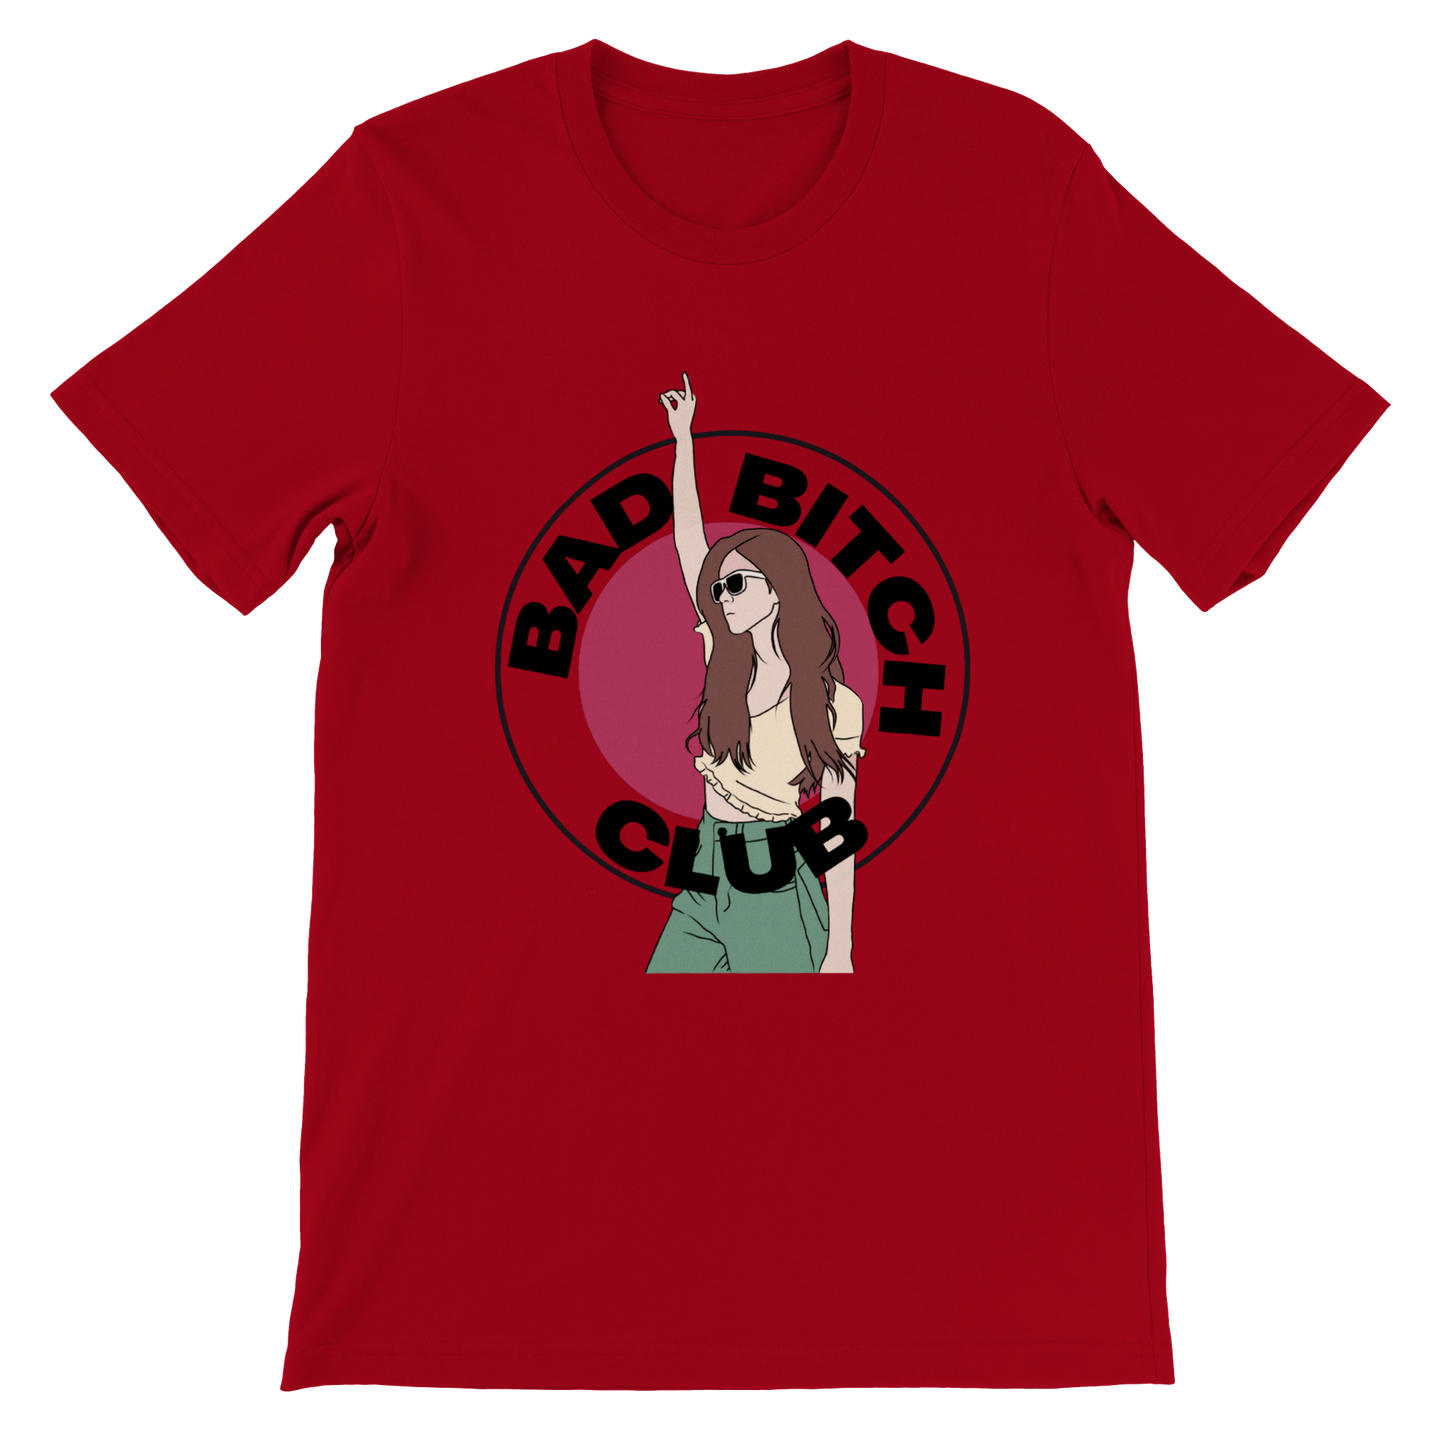 Bad Bitch Club - Premium Unisex Crewneck T-shirt